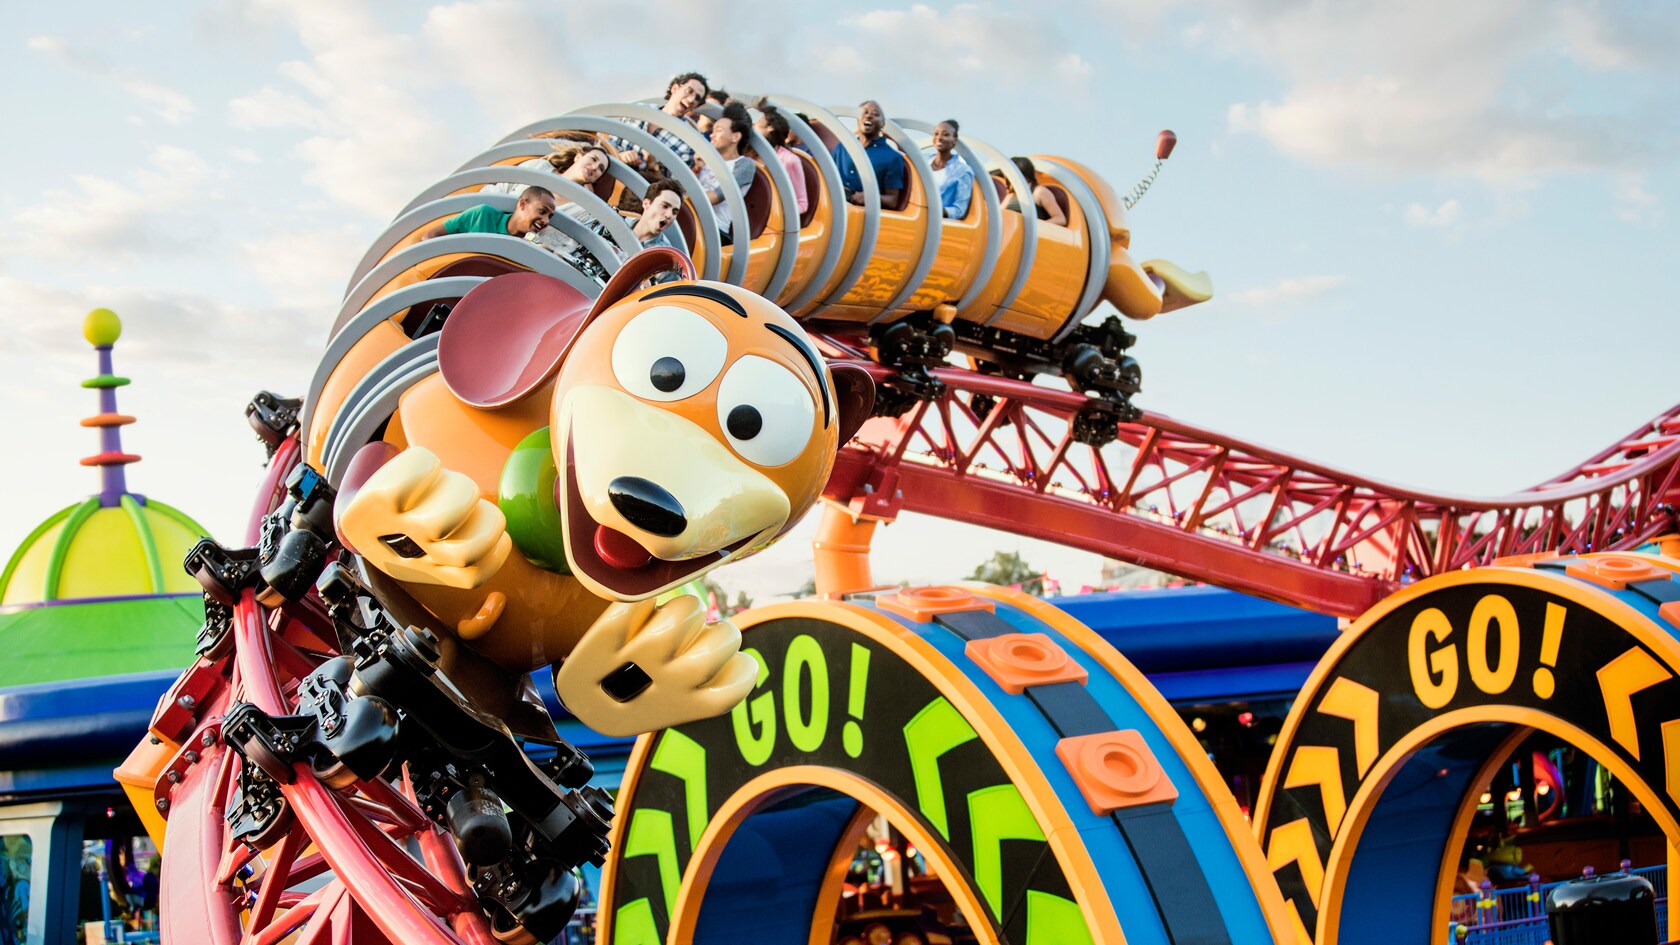 Slinky Dog Dash Roller Coaster at Toy Story Land | Walt Disney World Resort